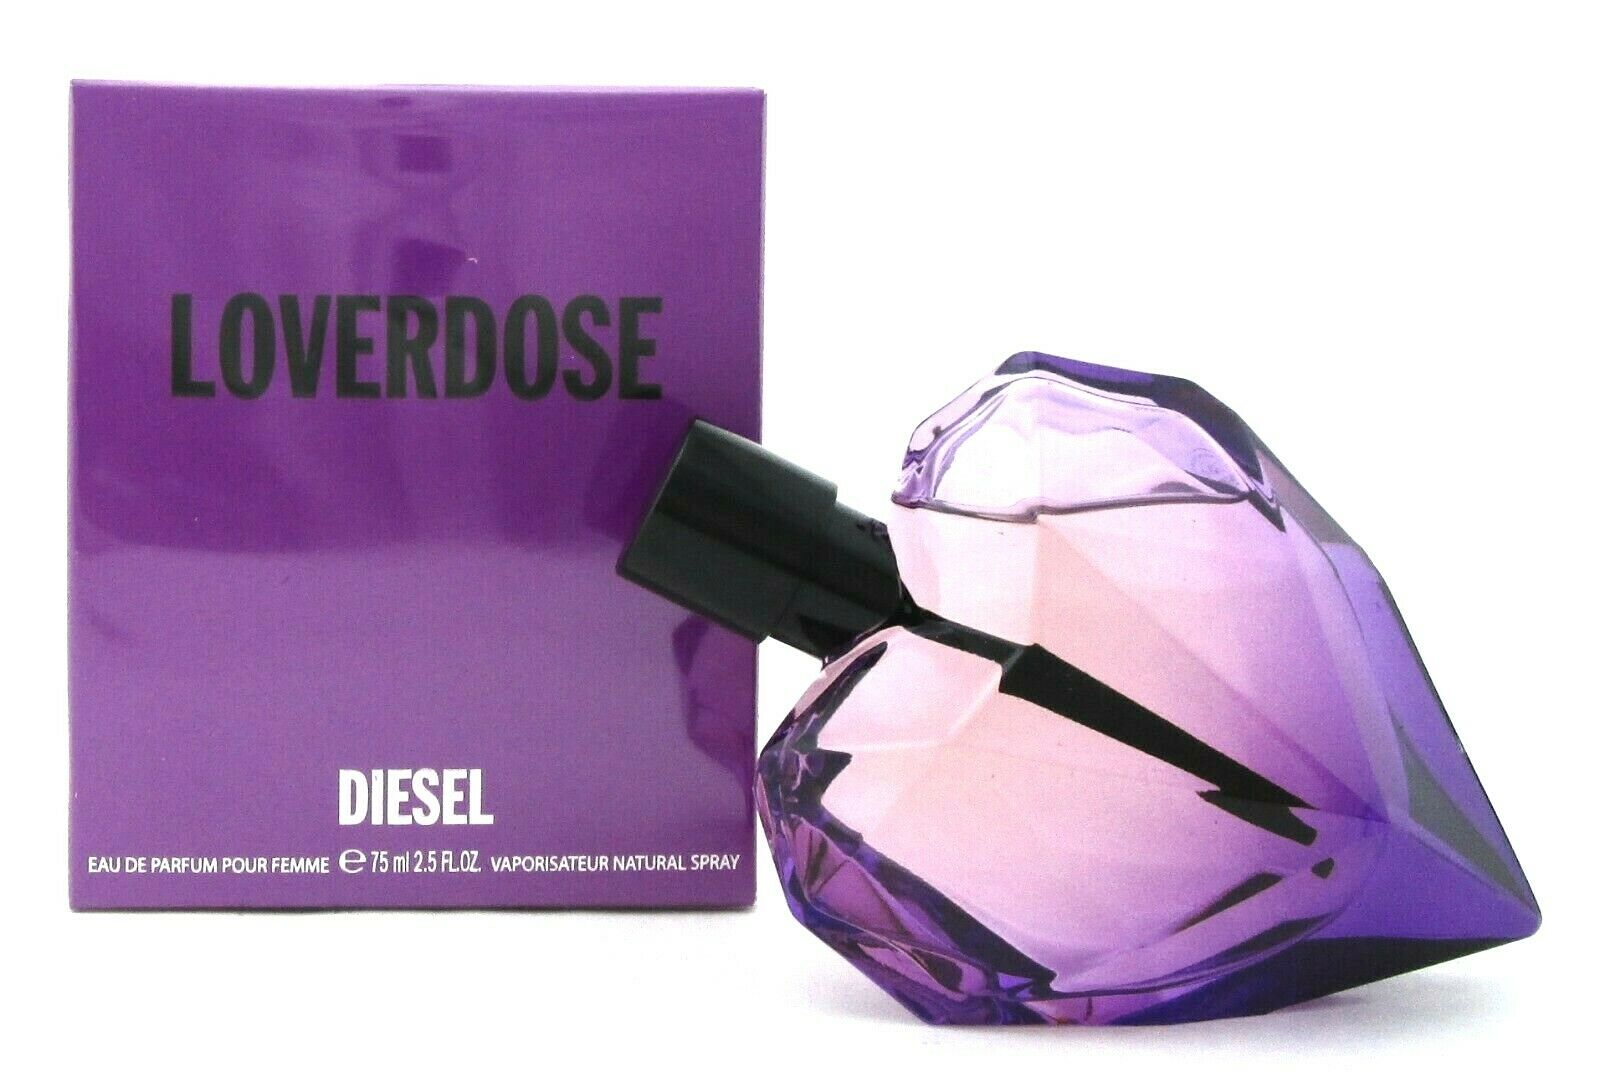 Loverdose by Diesel 2.5 oz./ 75 ml. Eau de Parfum Spray for Women